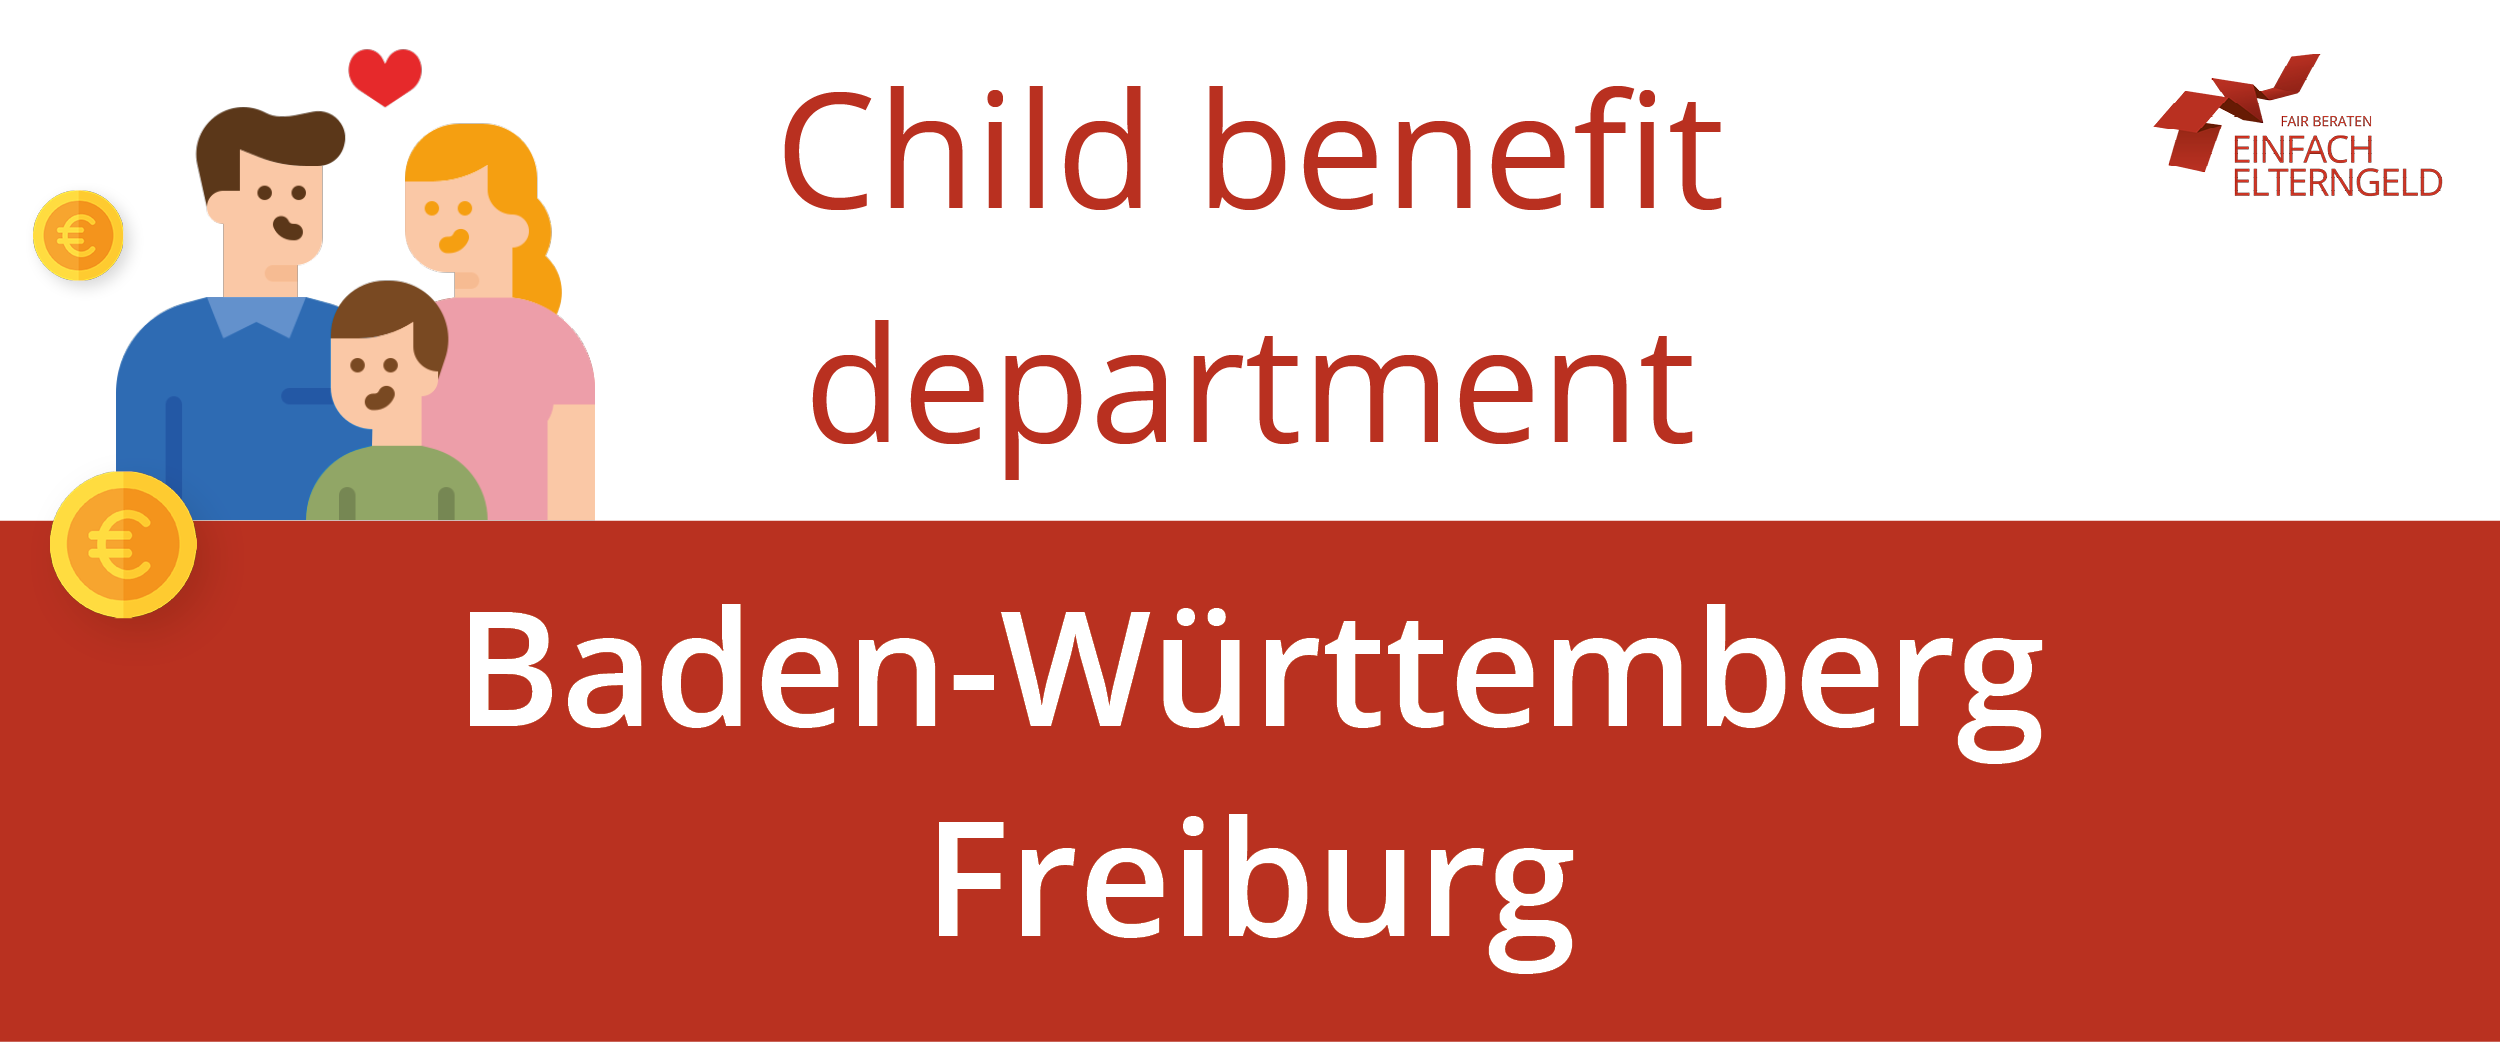 We present you the Child benefit department Baden-Württemberg Freiburg.